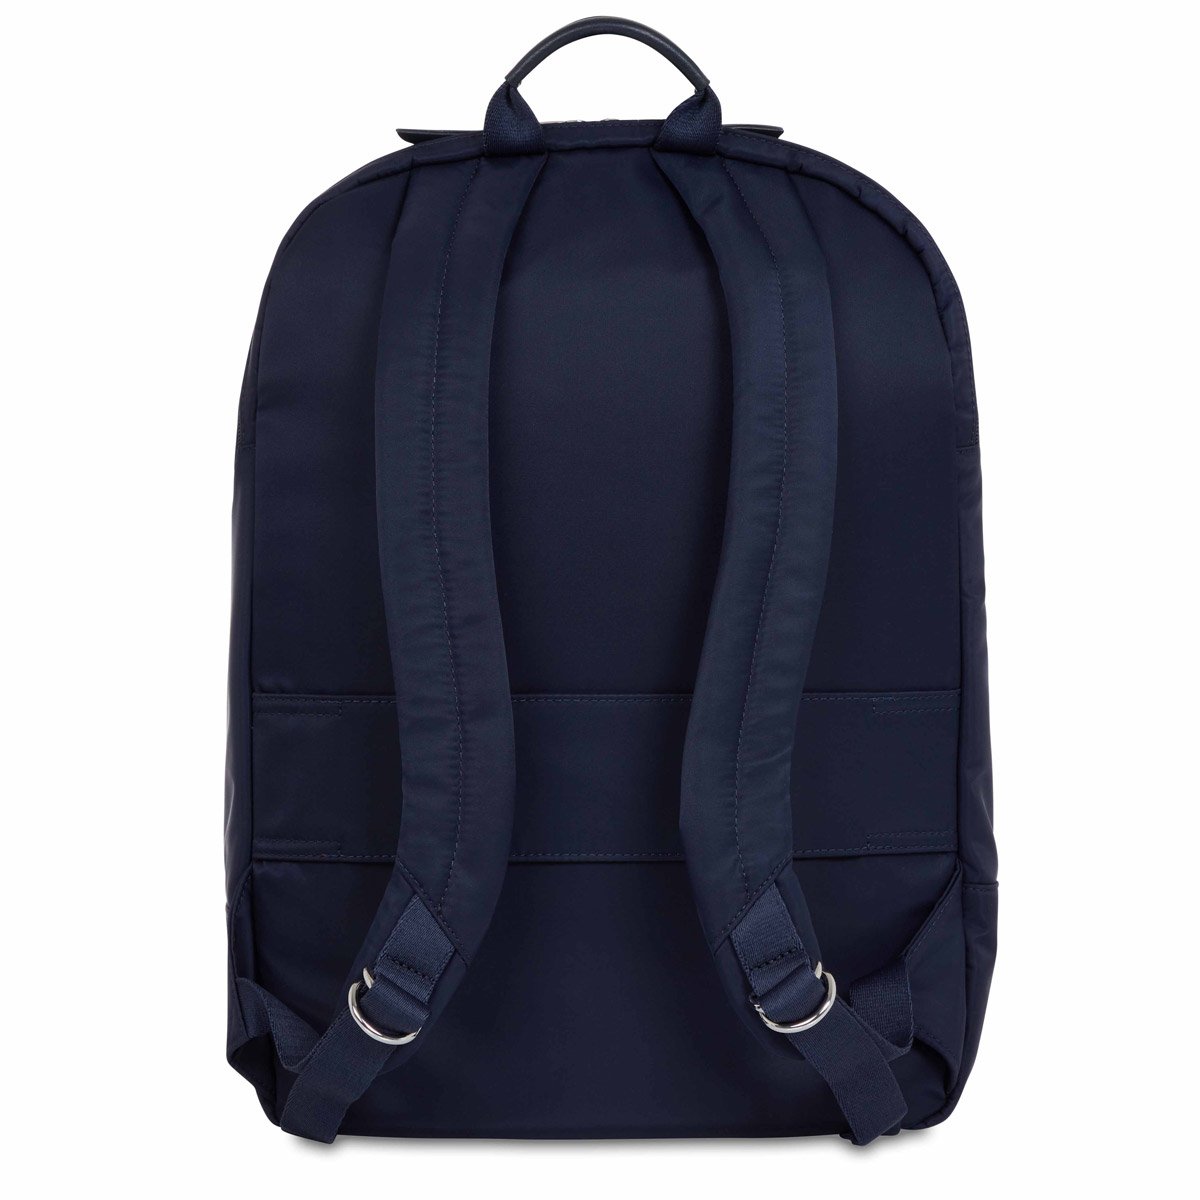 Beaufort Laptop Backpack - 15.6